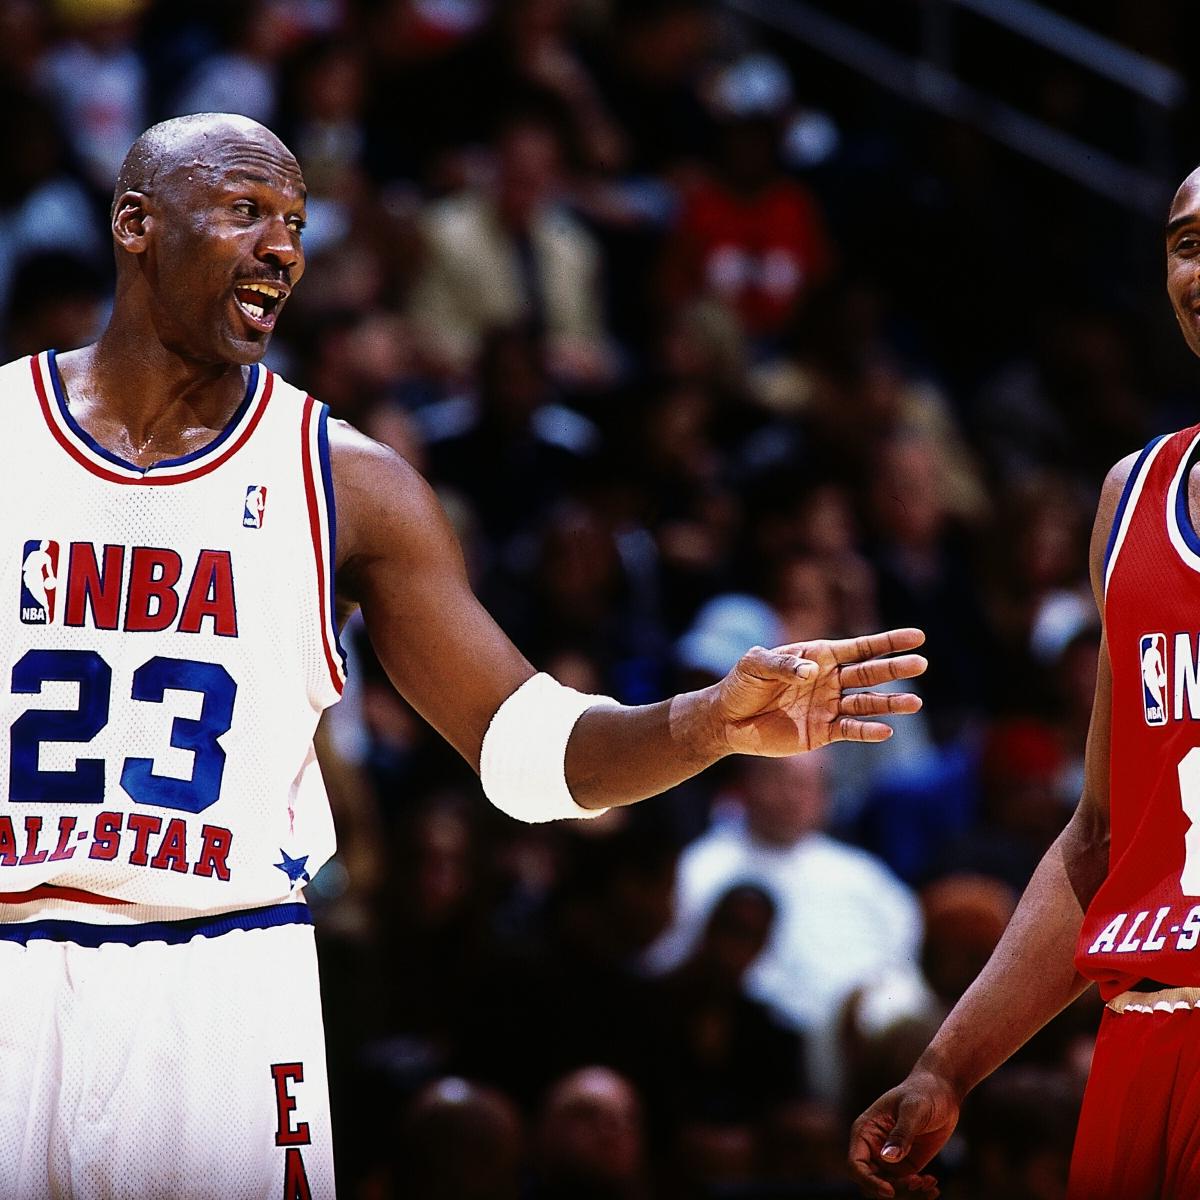 NBA All-Star Game: Best photos